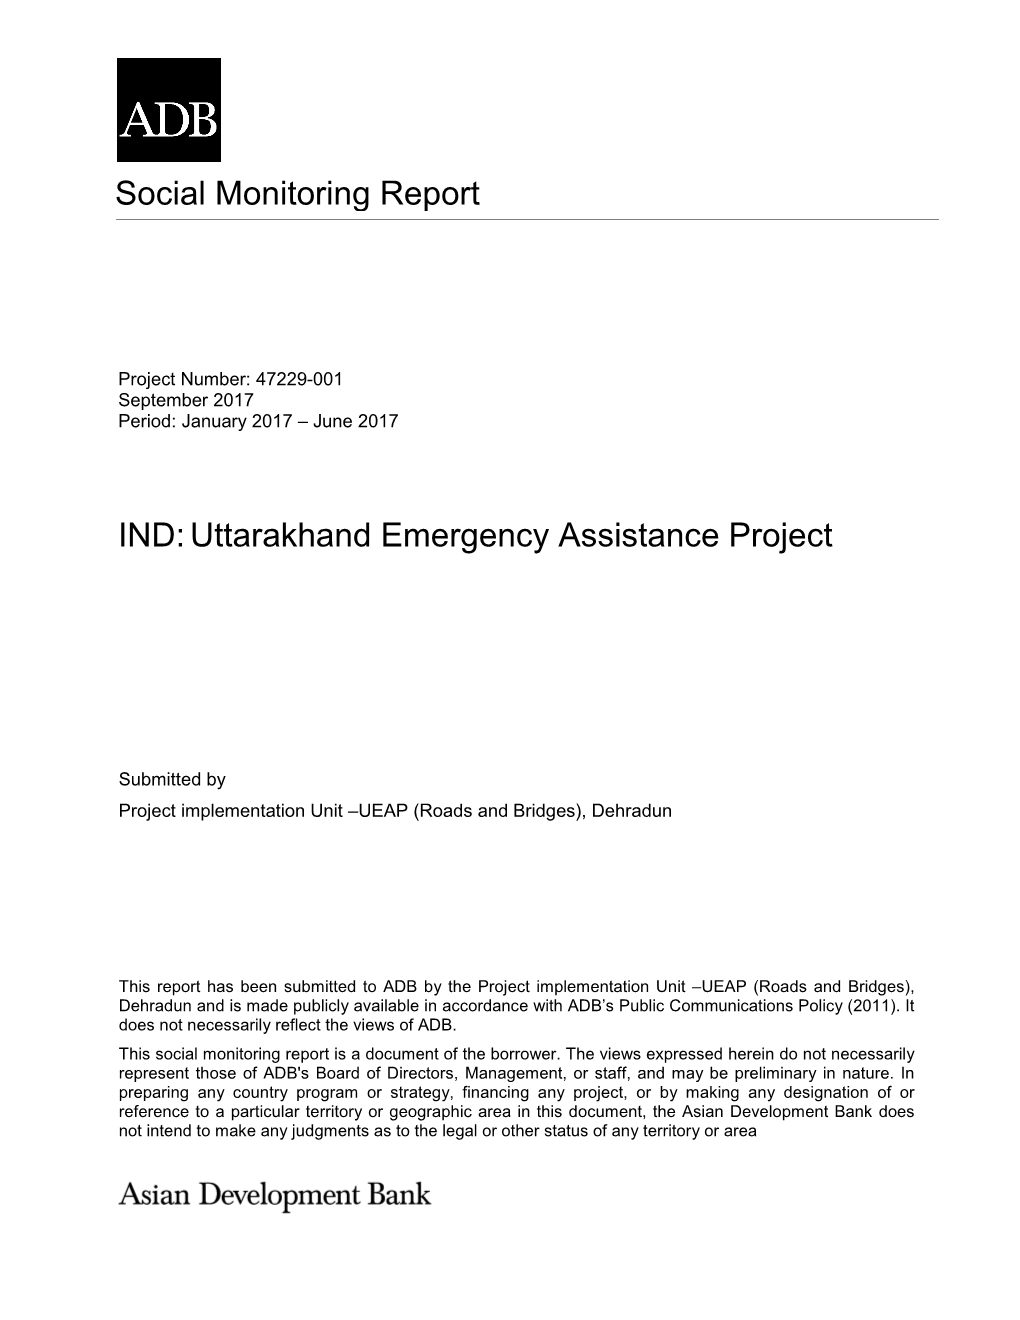 Social Monitoring Report IND:Uttarakhand Emergency